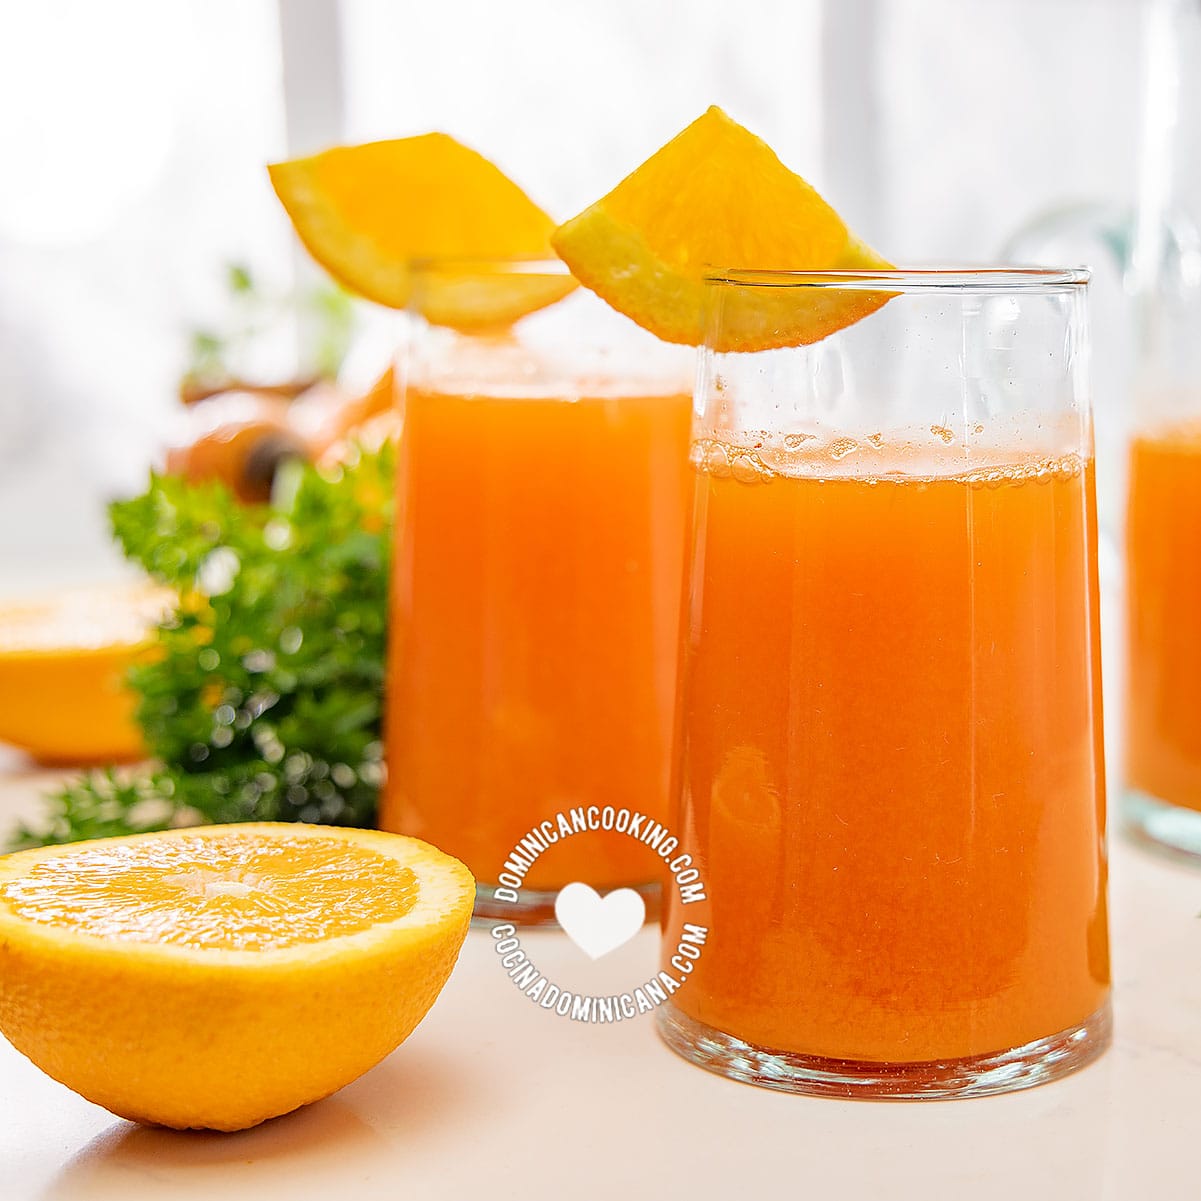 Jugos de zanahoria y naranja (carrot and orange juice).